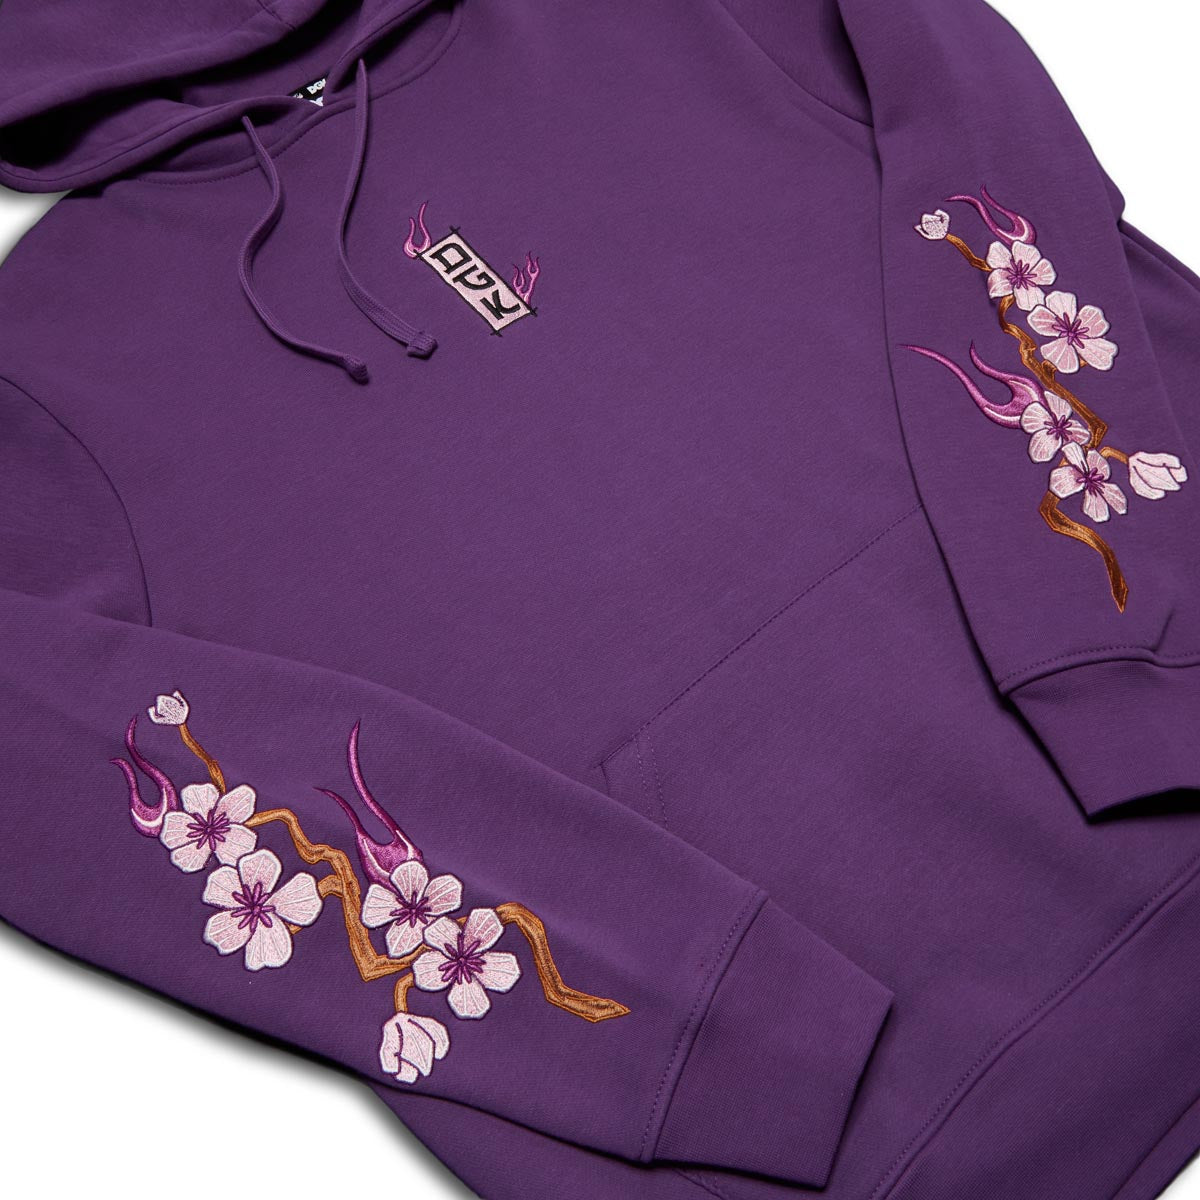 DGK Fire Blossom Hoodie - Purple image 3